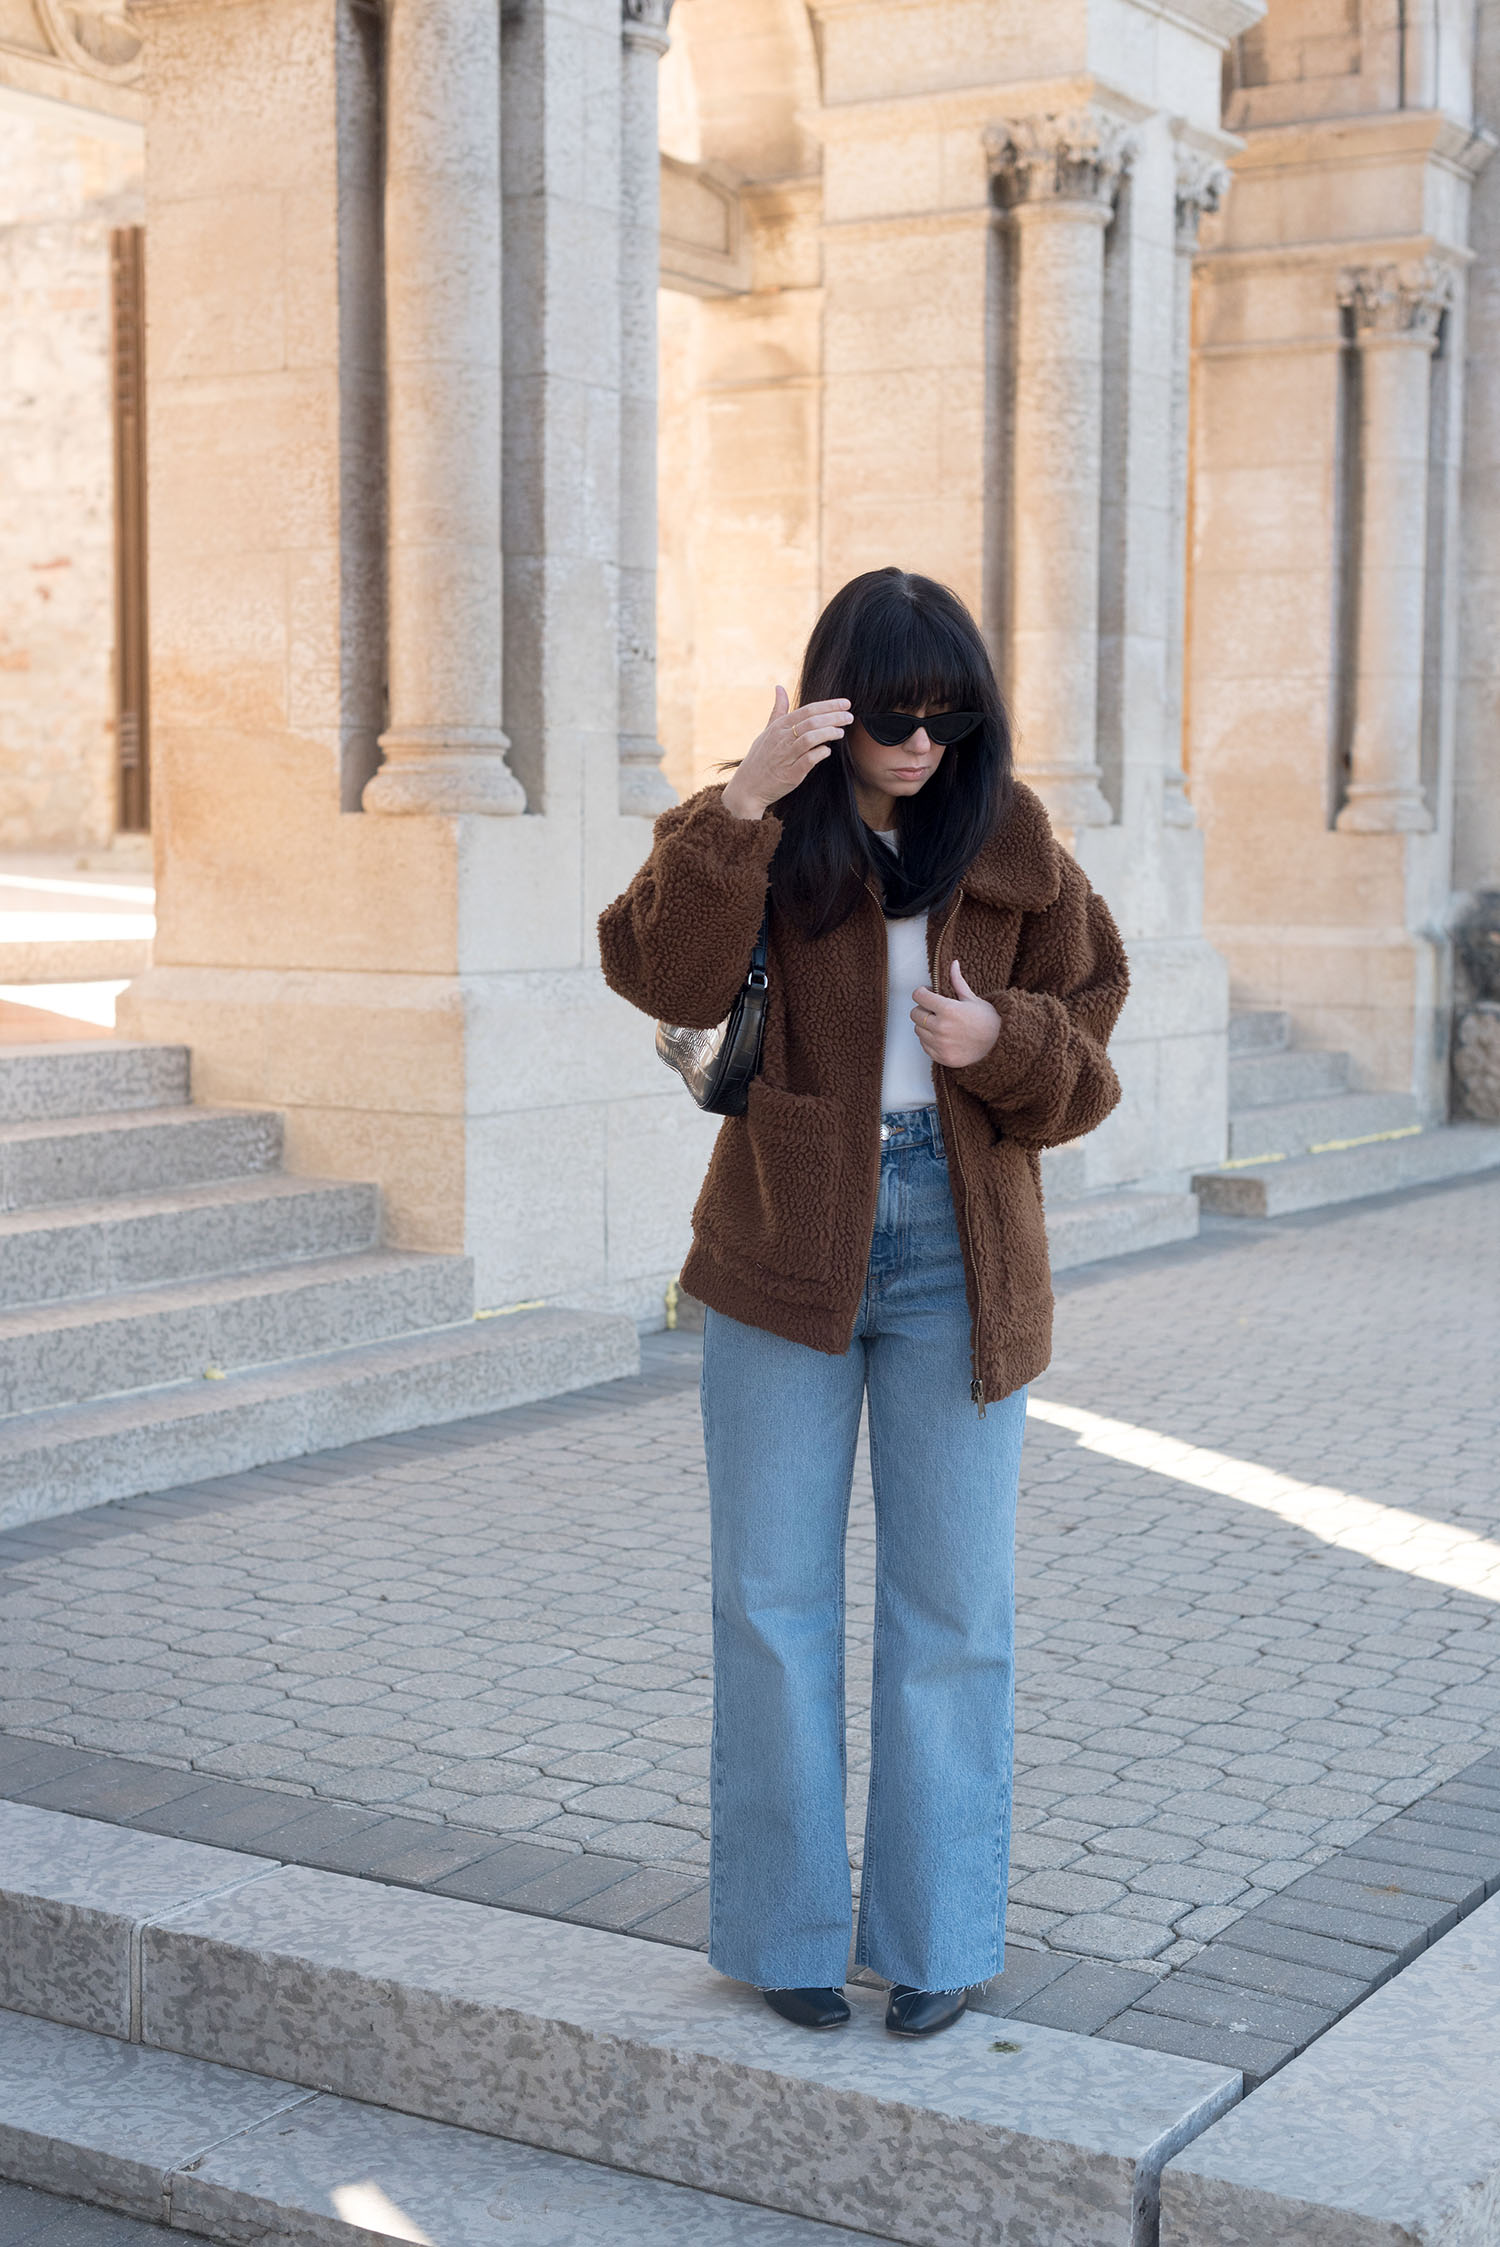 Coco & Vera - Zara jeans, Garage Clothing coat, JW Pei handbag